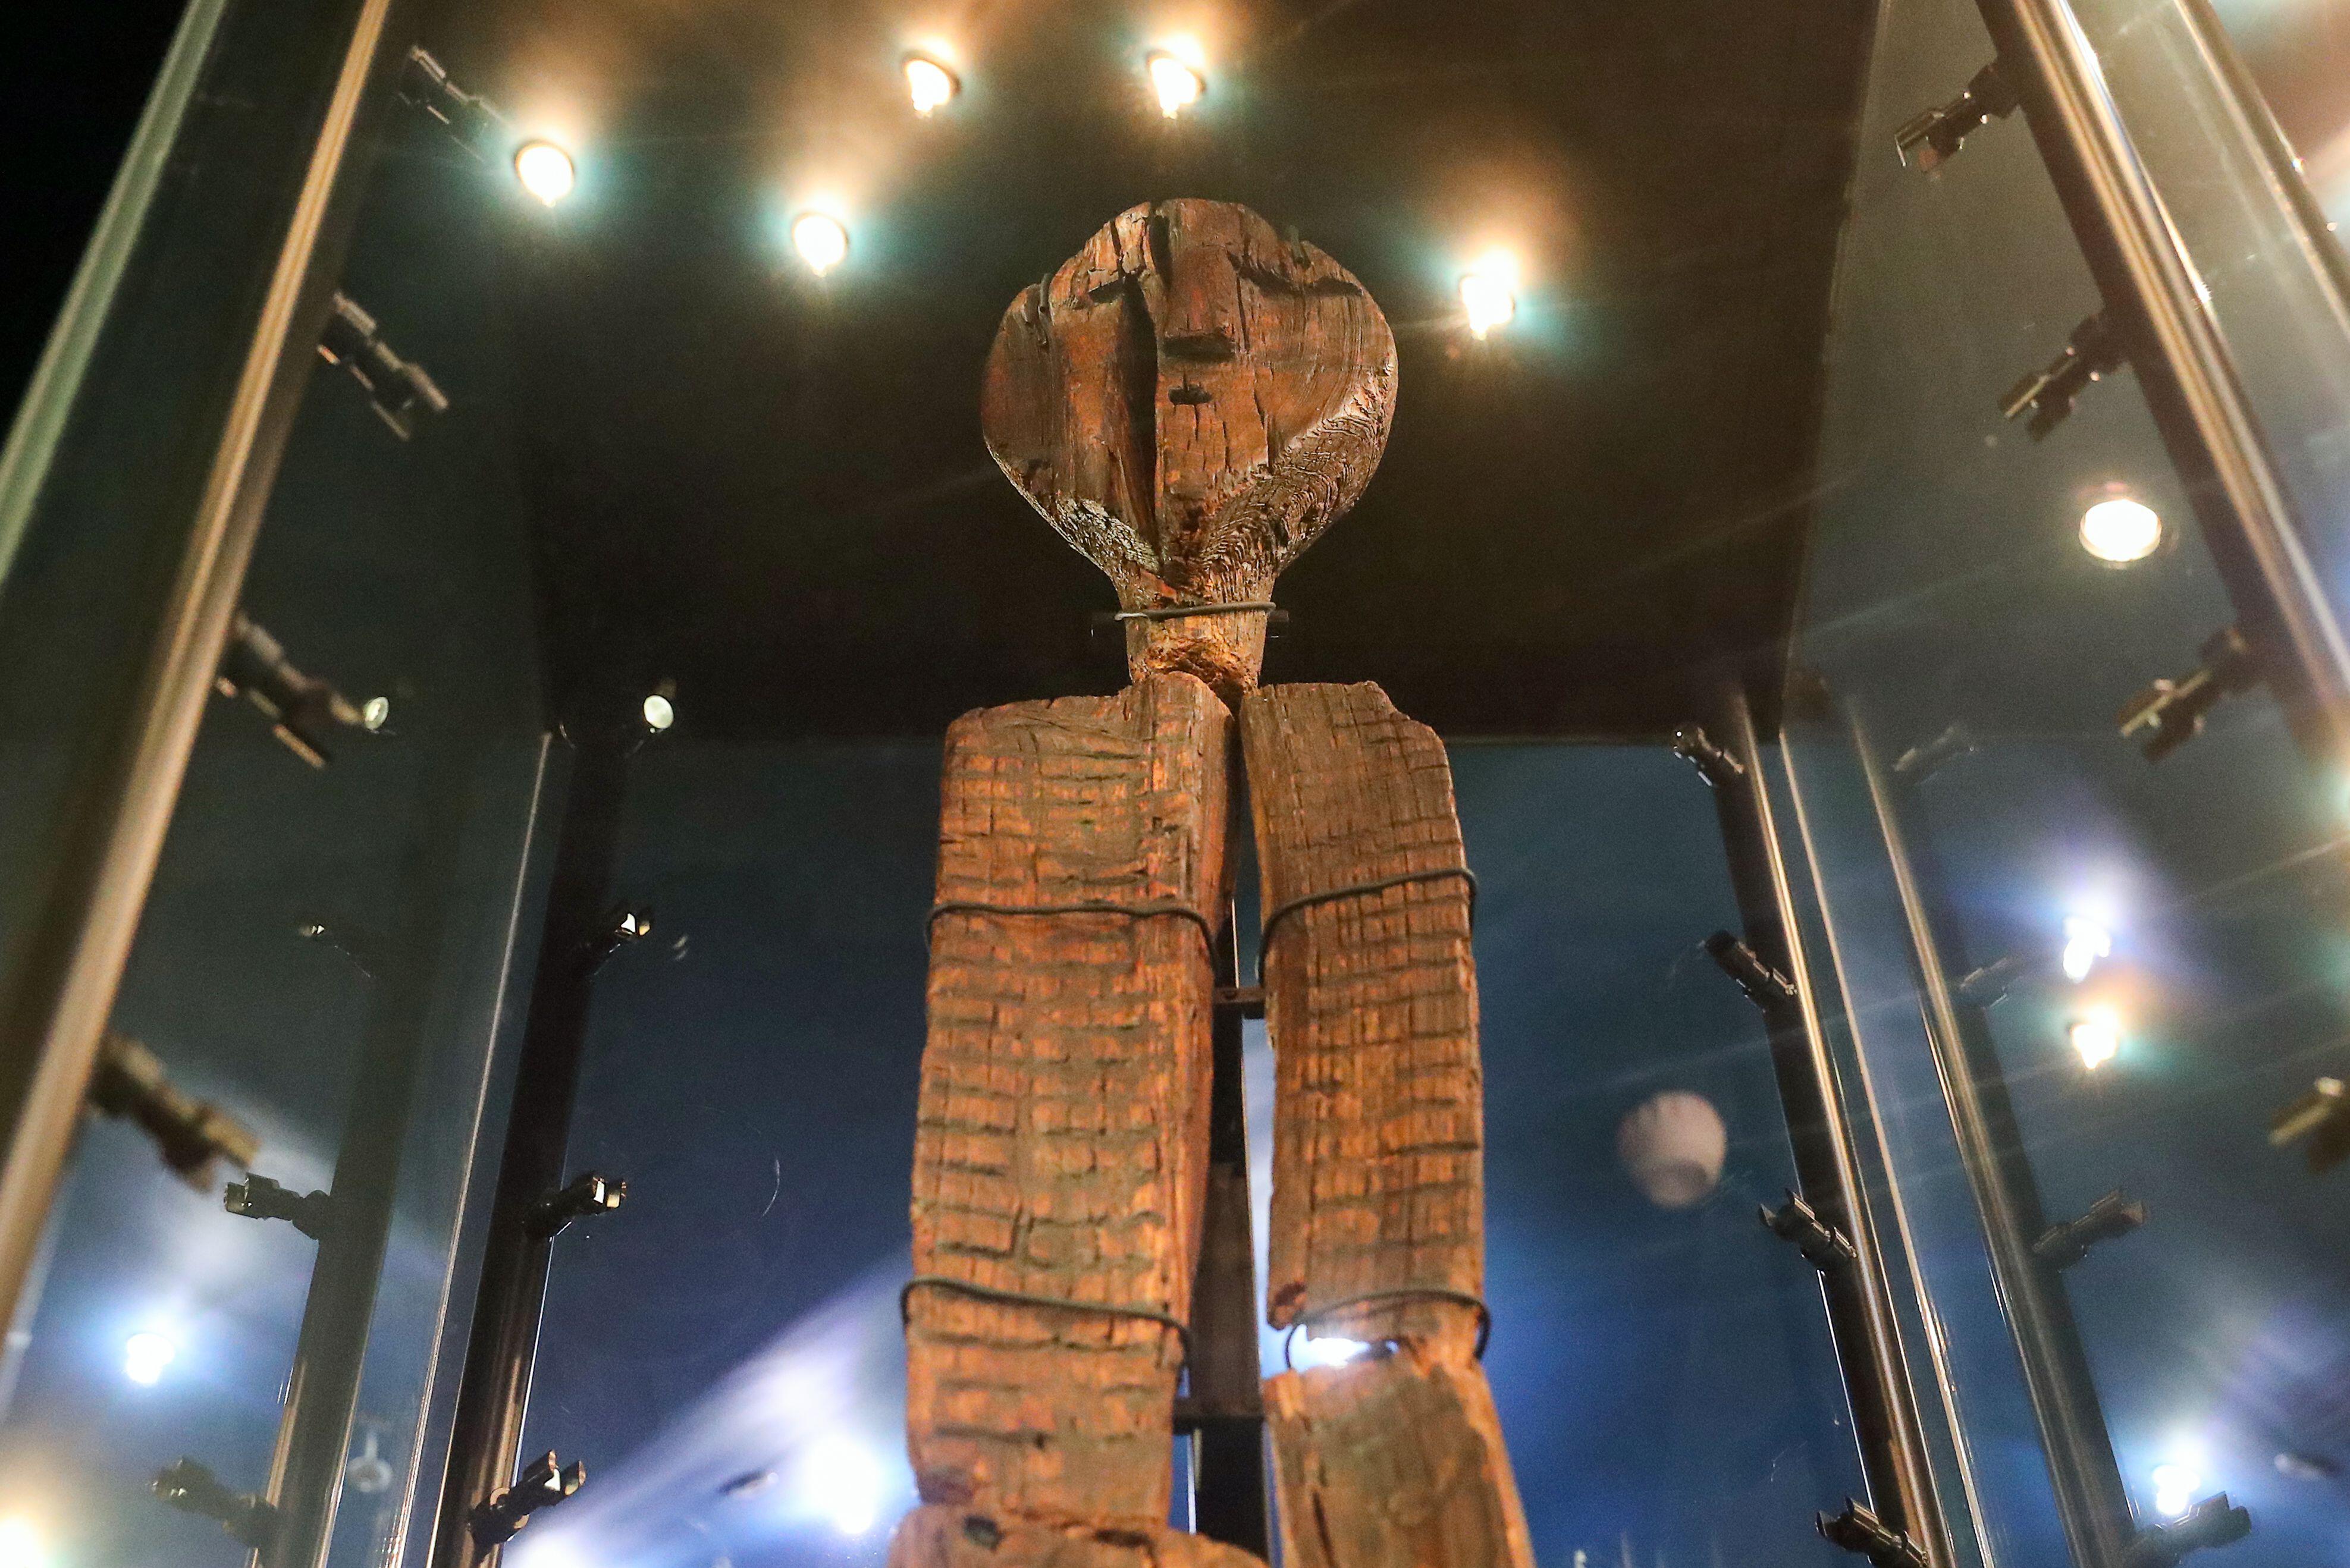 The Shigir Idol on display at the Sverdlovsk Regional Museum of Local Lore